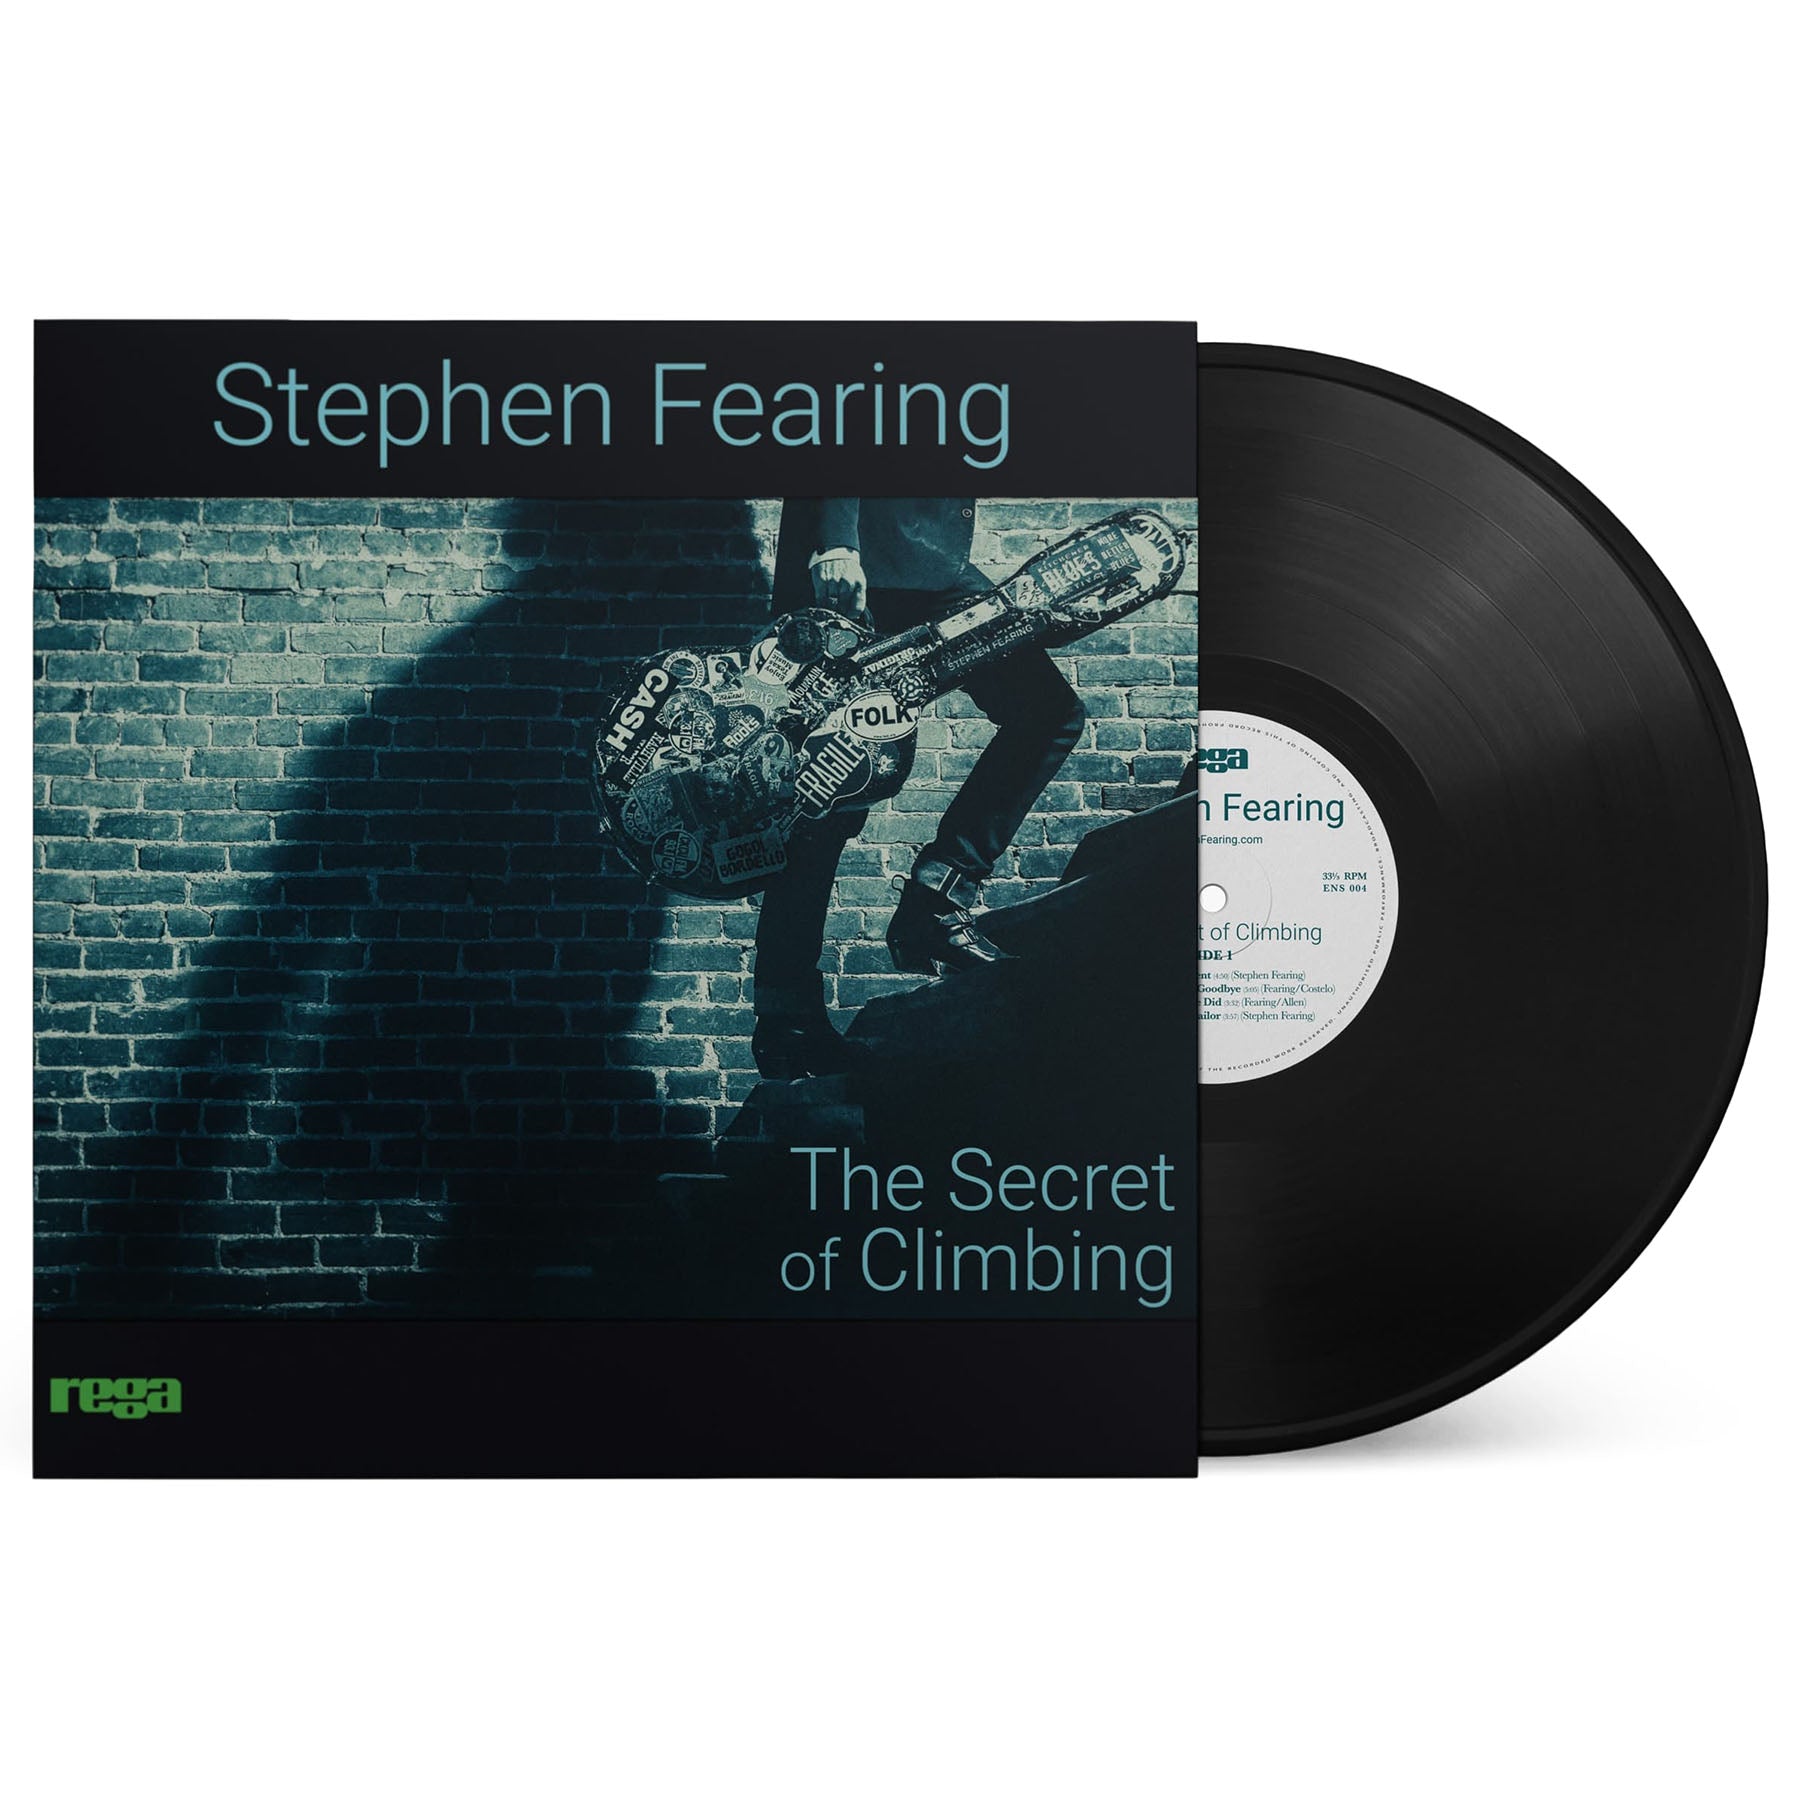 Rega Stephen Fearing LP - The Secret of Climbing LP